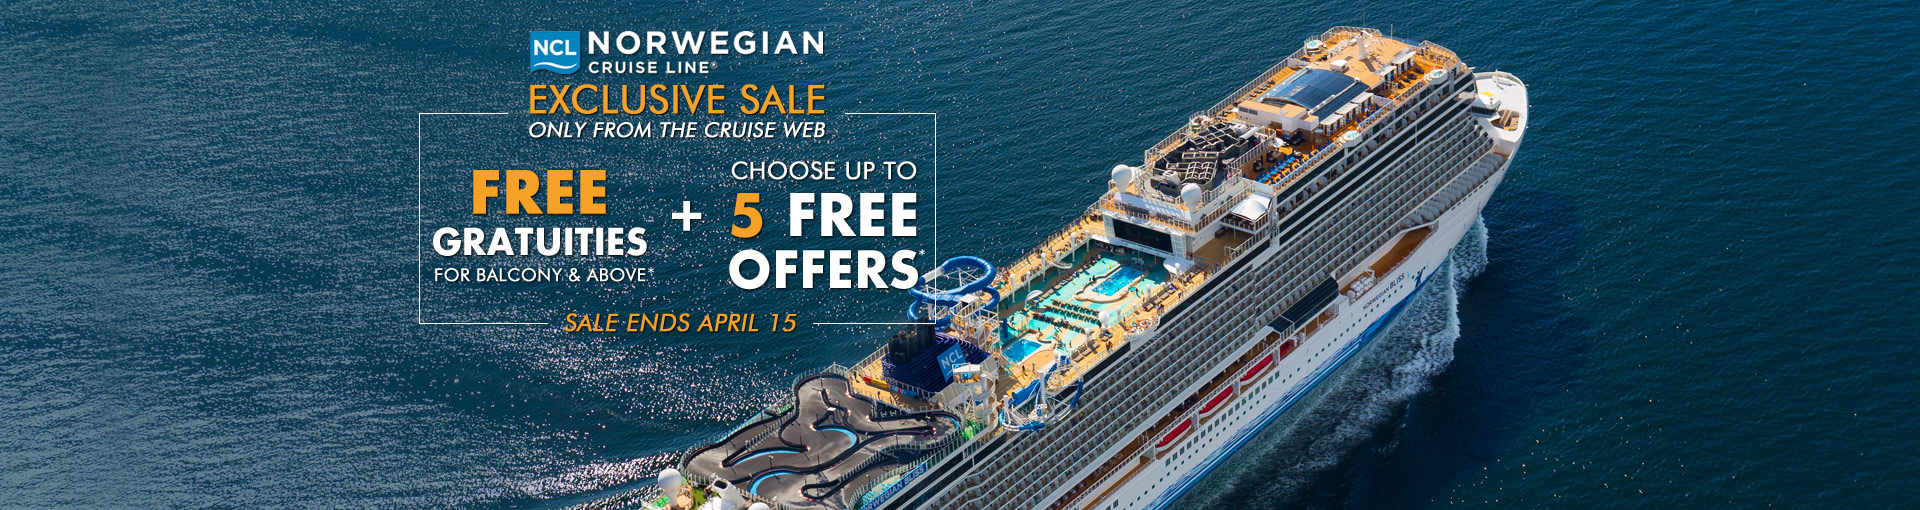 Norwegian Cruise Line Specials Free Gratuities, Shore Excursion Credit